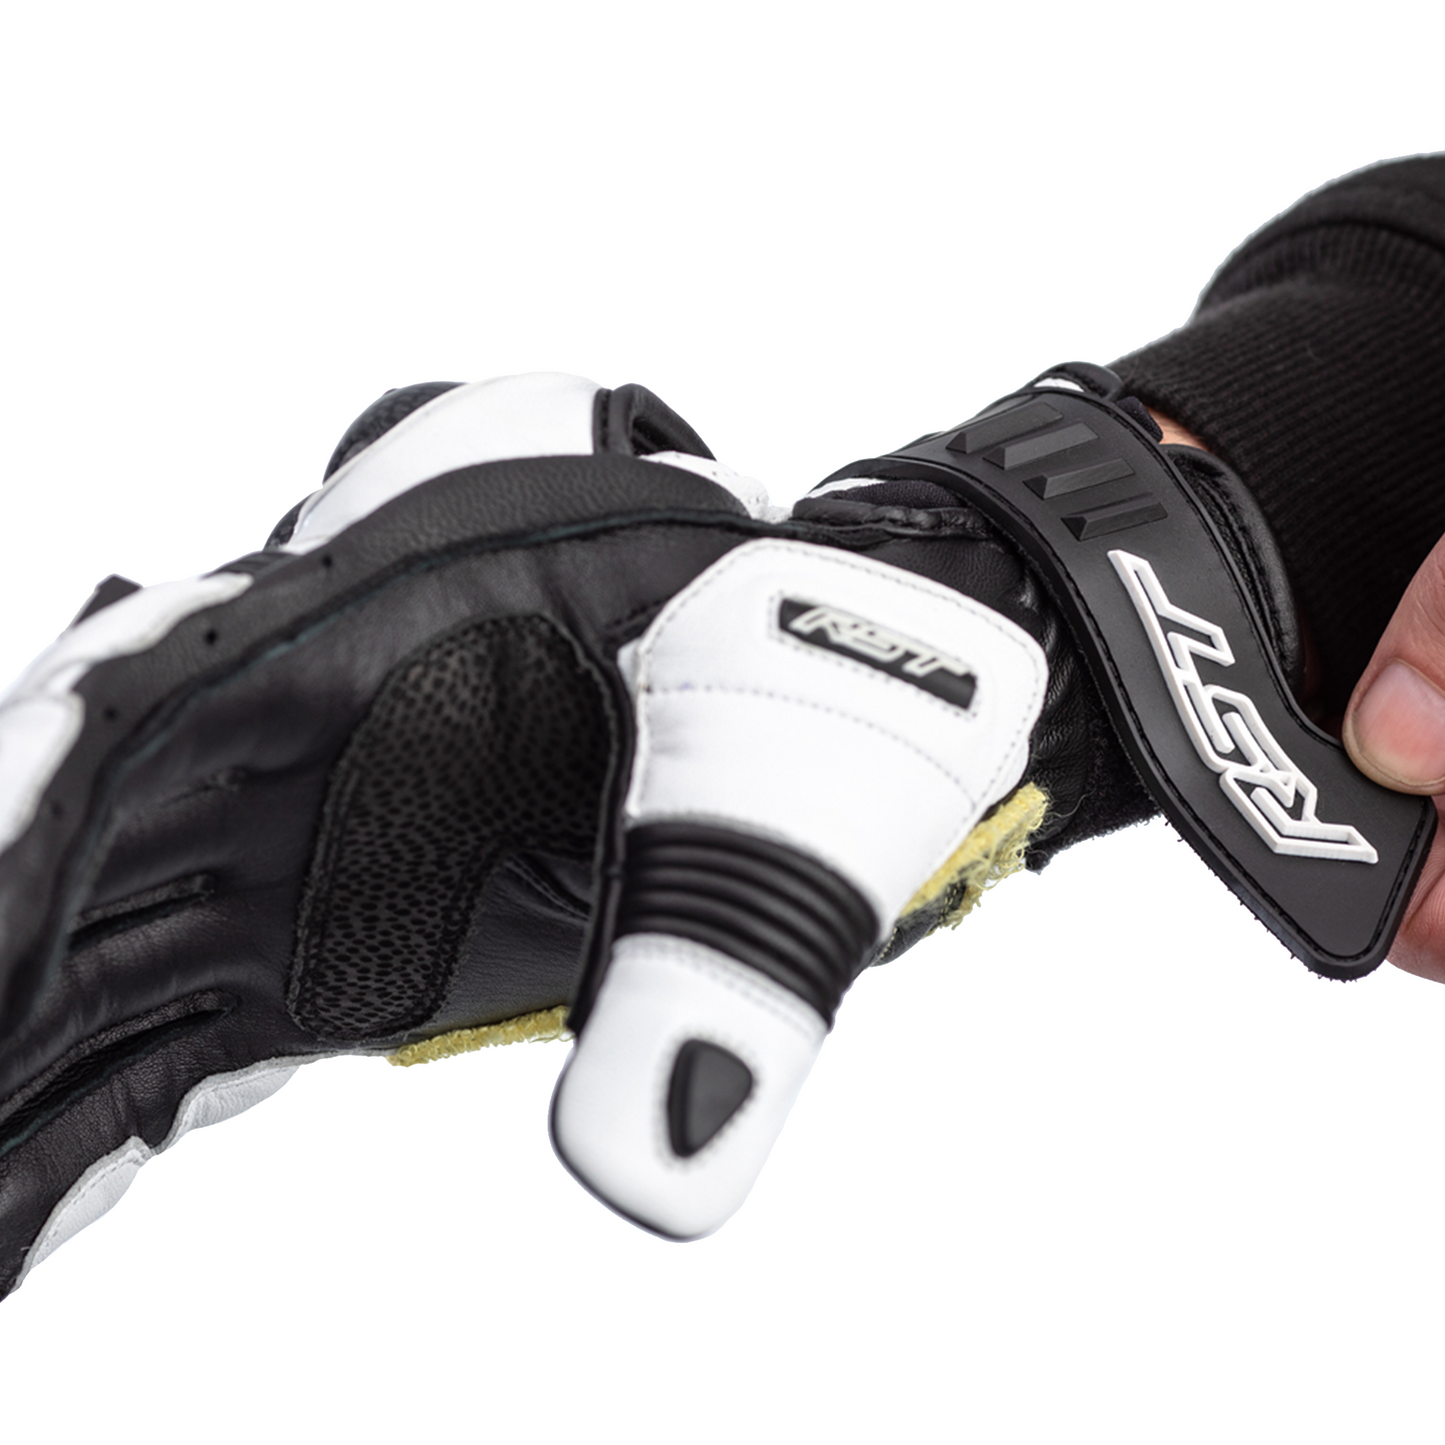 RST Tractech Evo 4 Short (CE) Gloves - White